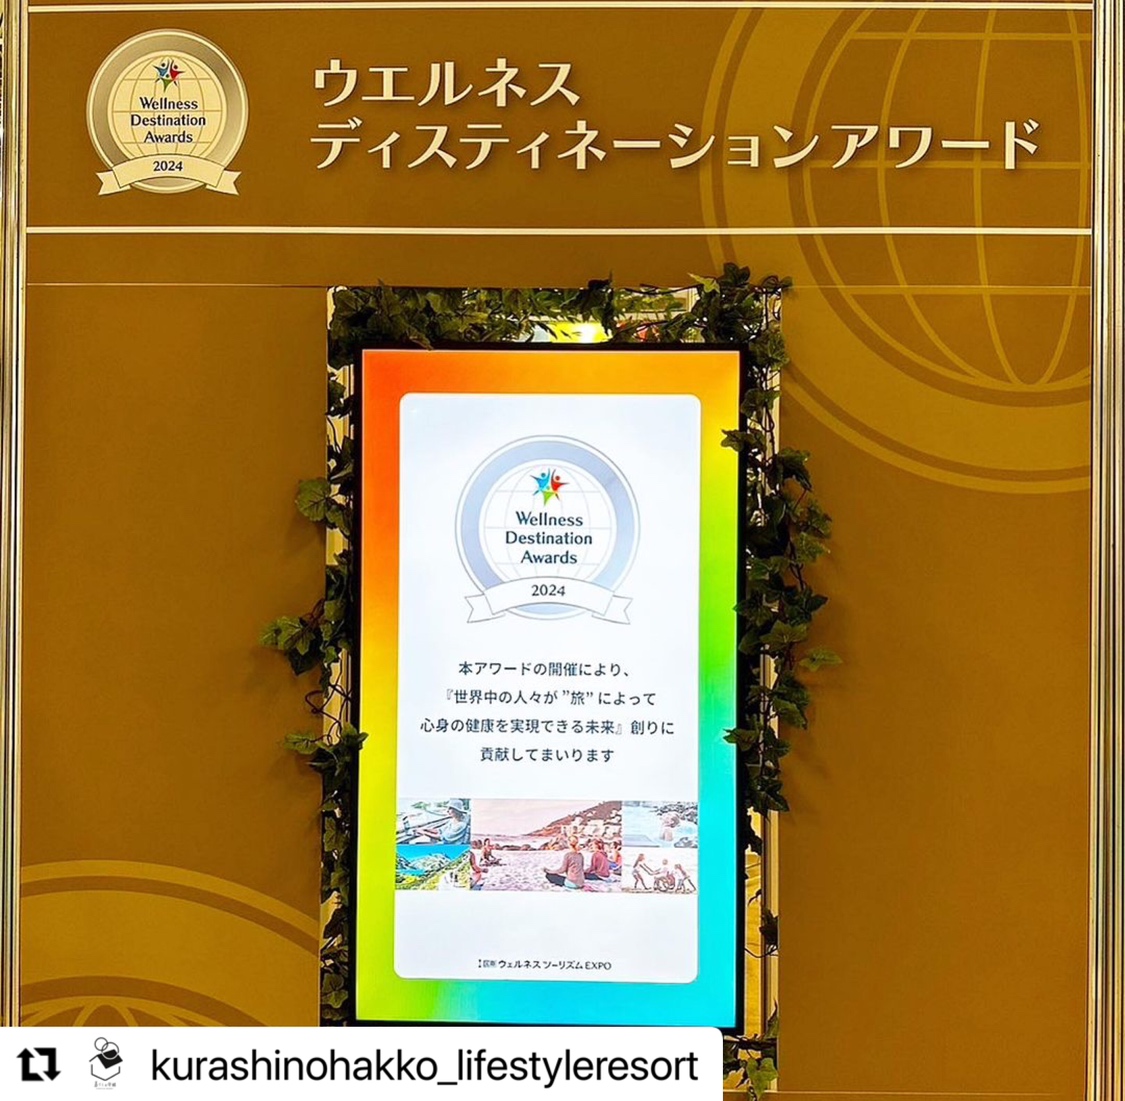 EM Hotel in Okinawa has been awarded the Wellness Destination Awards 2024!